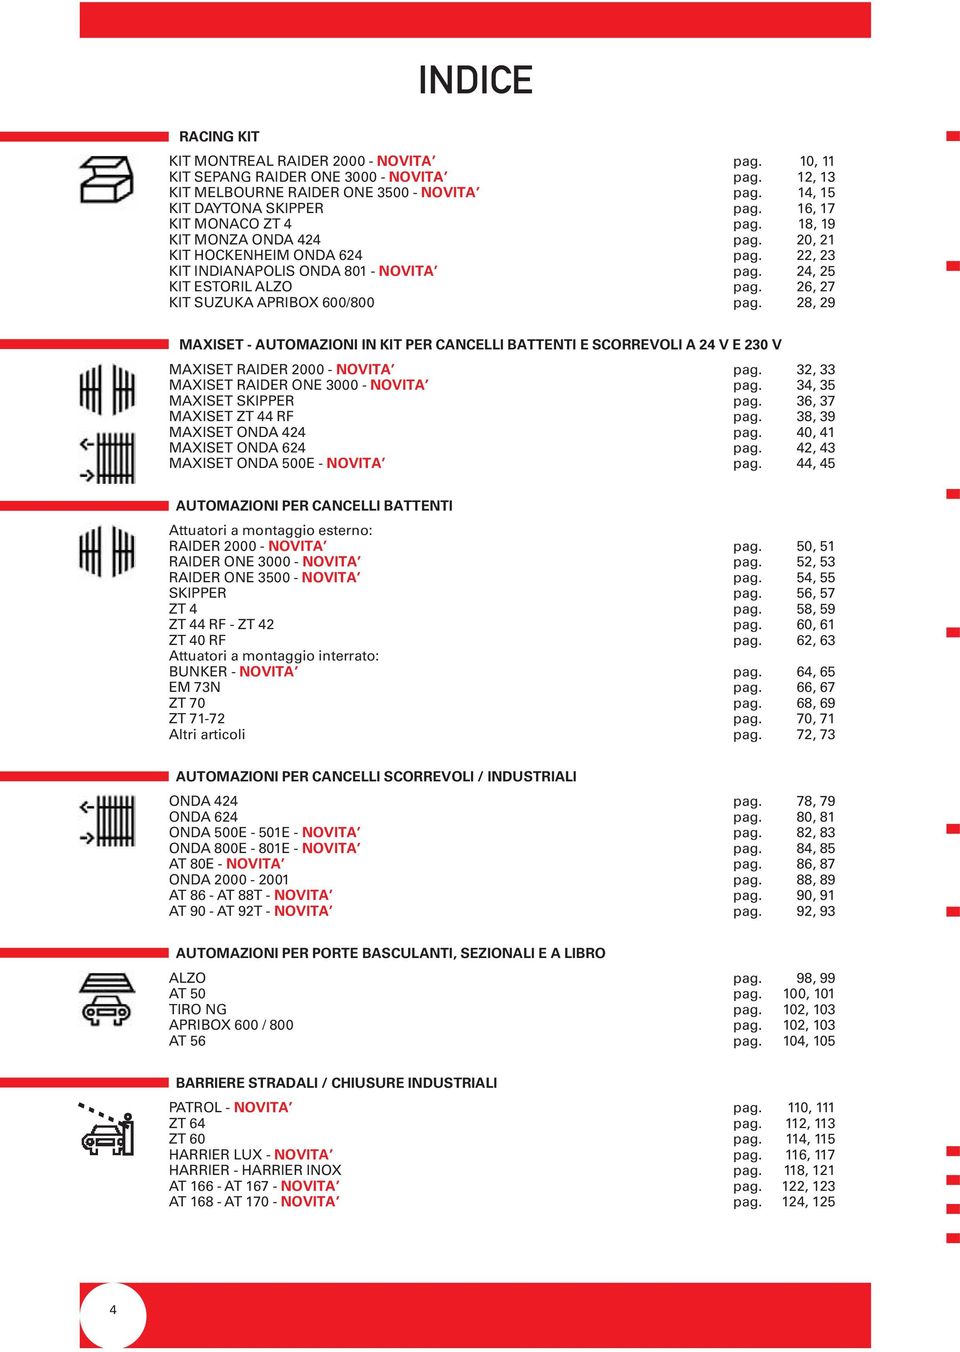 26, 27 KIT SUZUKA APRIBOX 600/800 pag. 28, 29 MAXISET - AUTOMAZIONI IN KIT PER CANCELLI BATTENTI E SCORREVOLI A 24 V E 230 V MAXISET RAIDER 2000 - NOVITA pag.